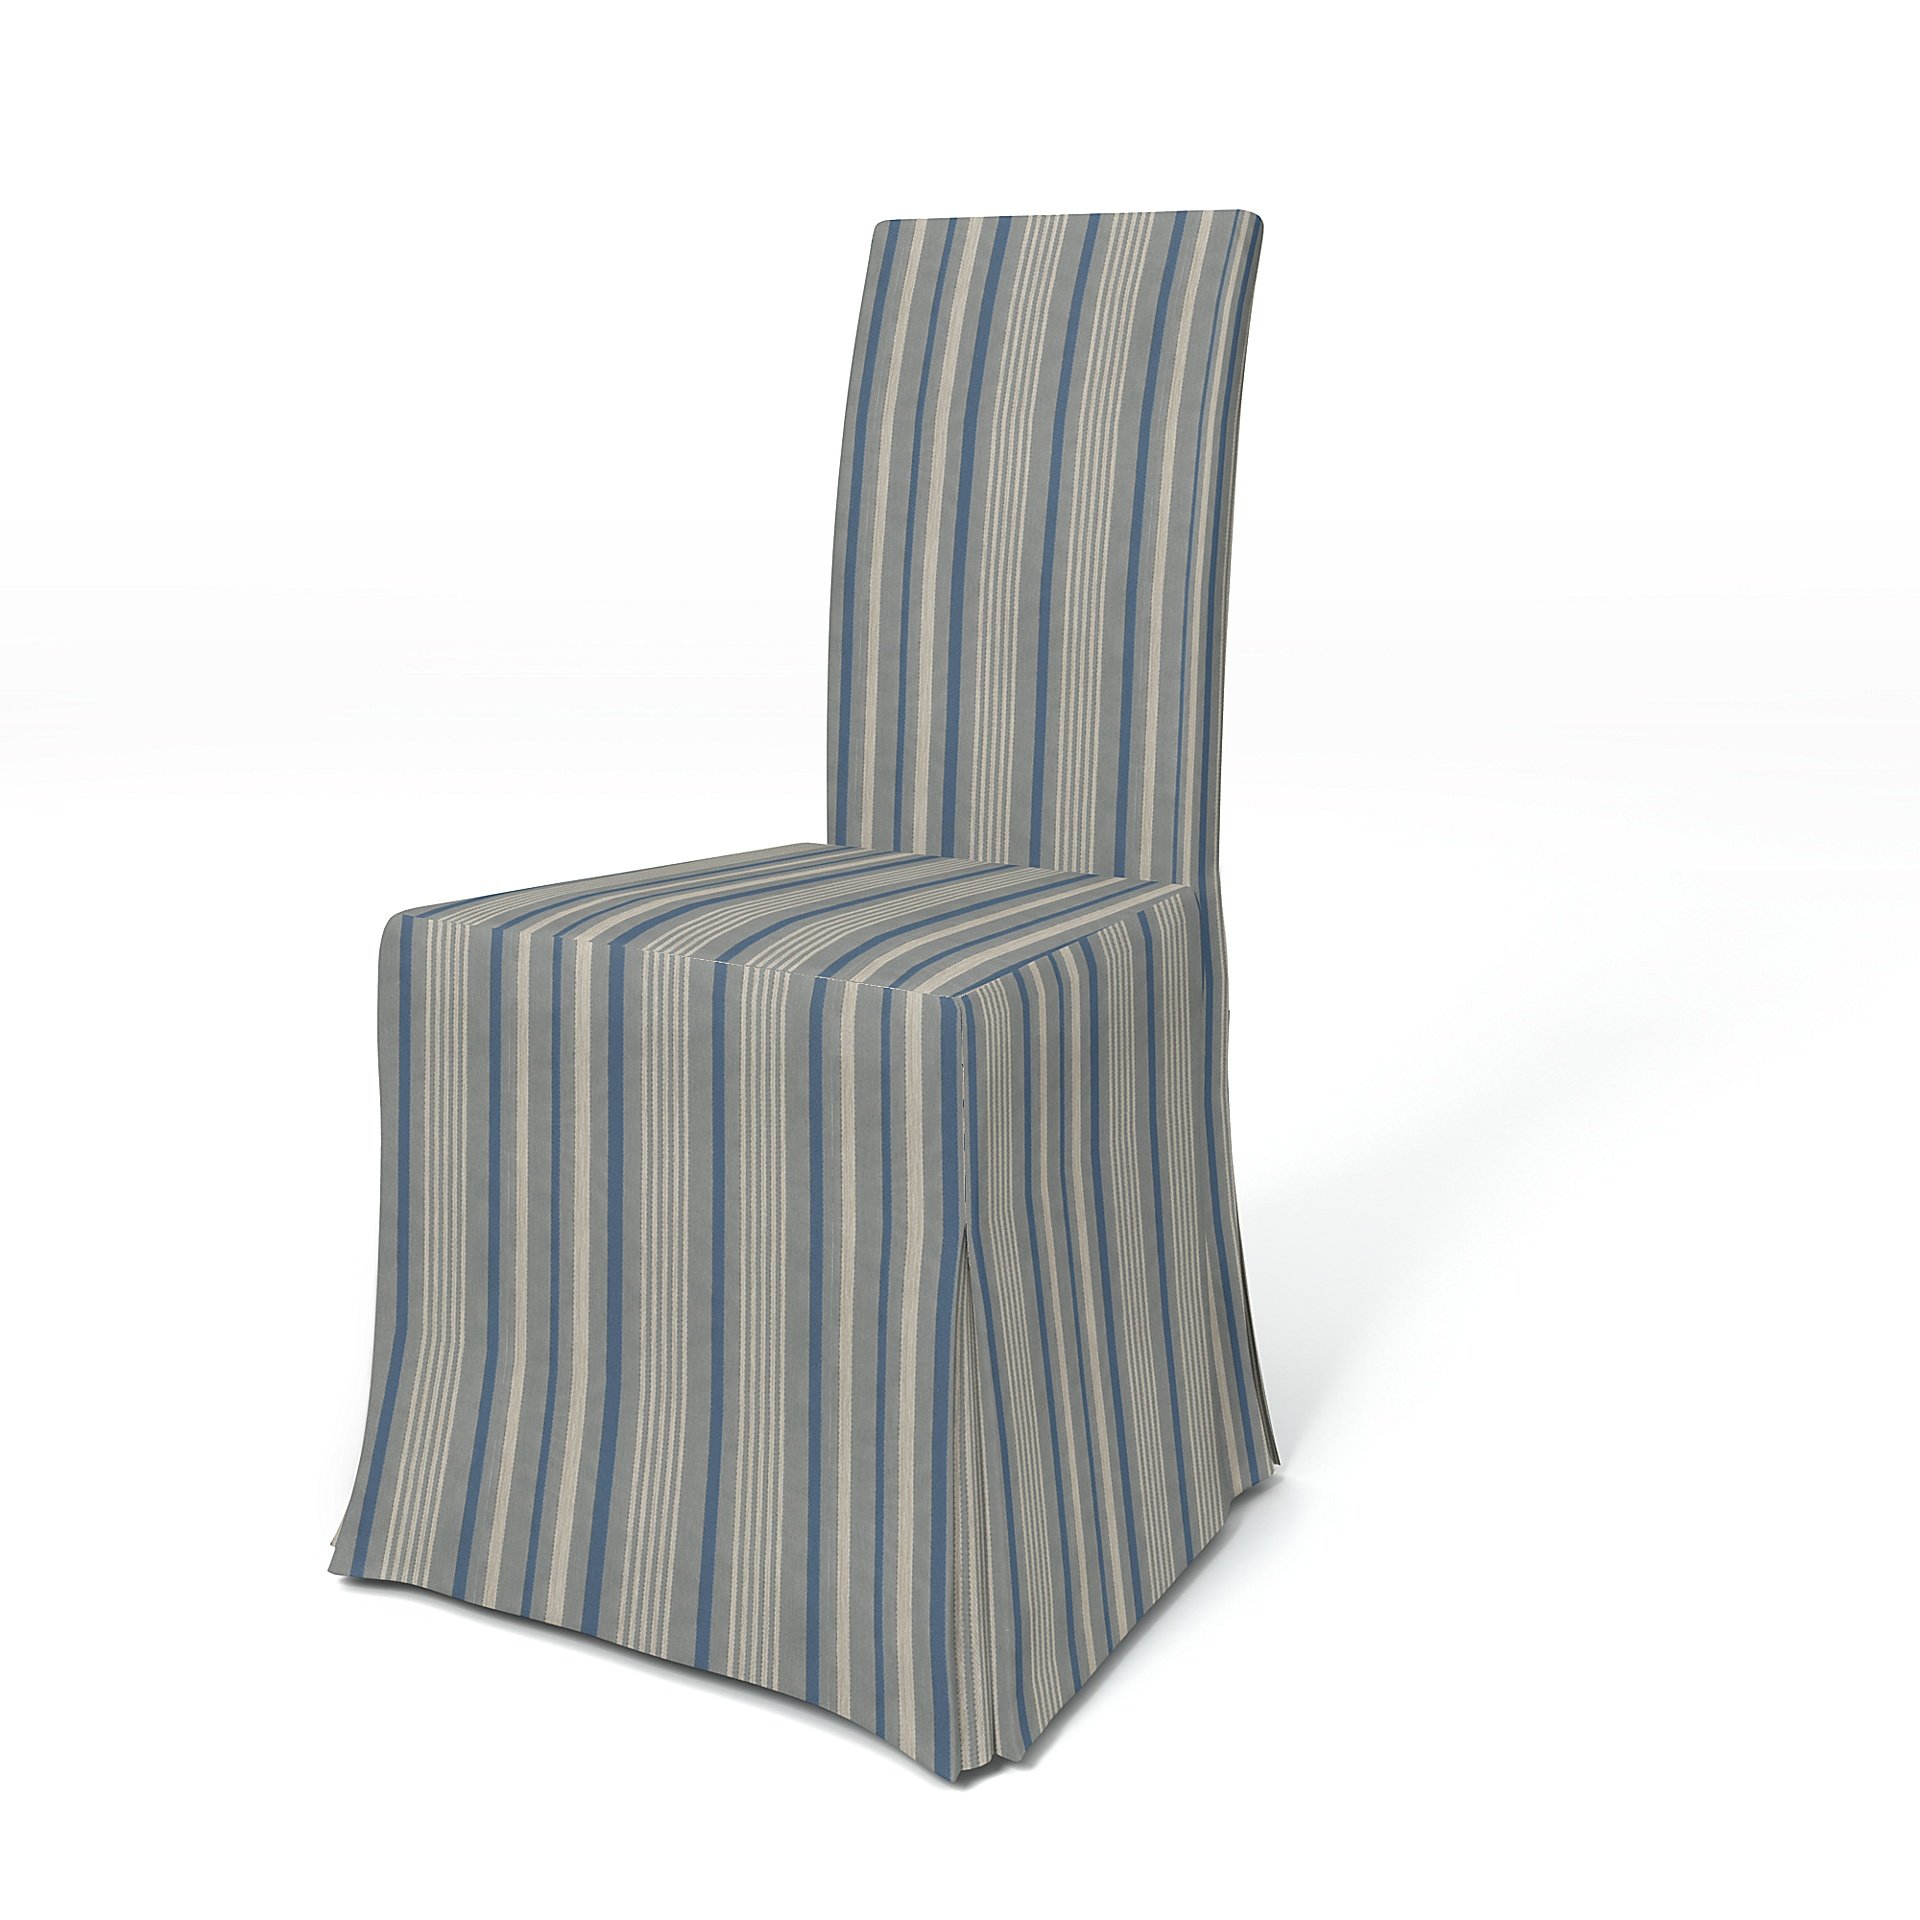 IKEA - Harry Dining Chair Cover, Ocean Blue, Outdoor - Bemz